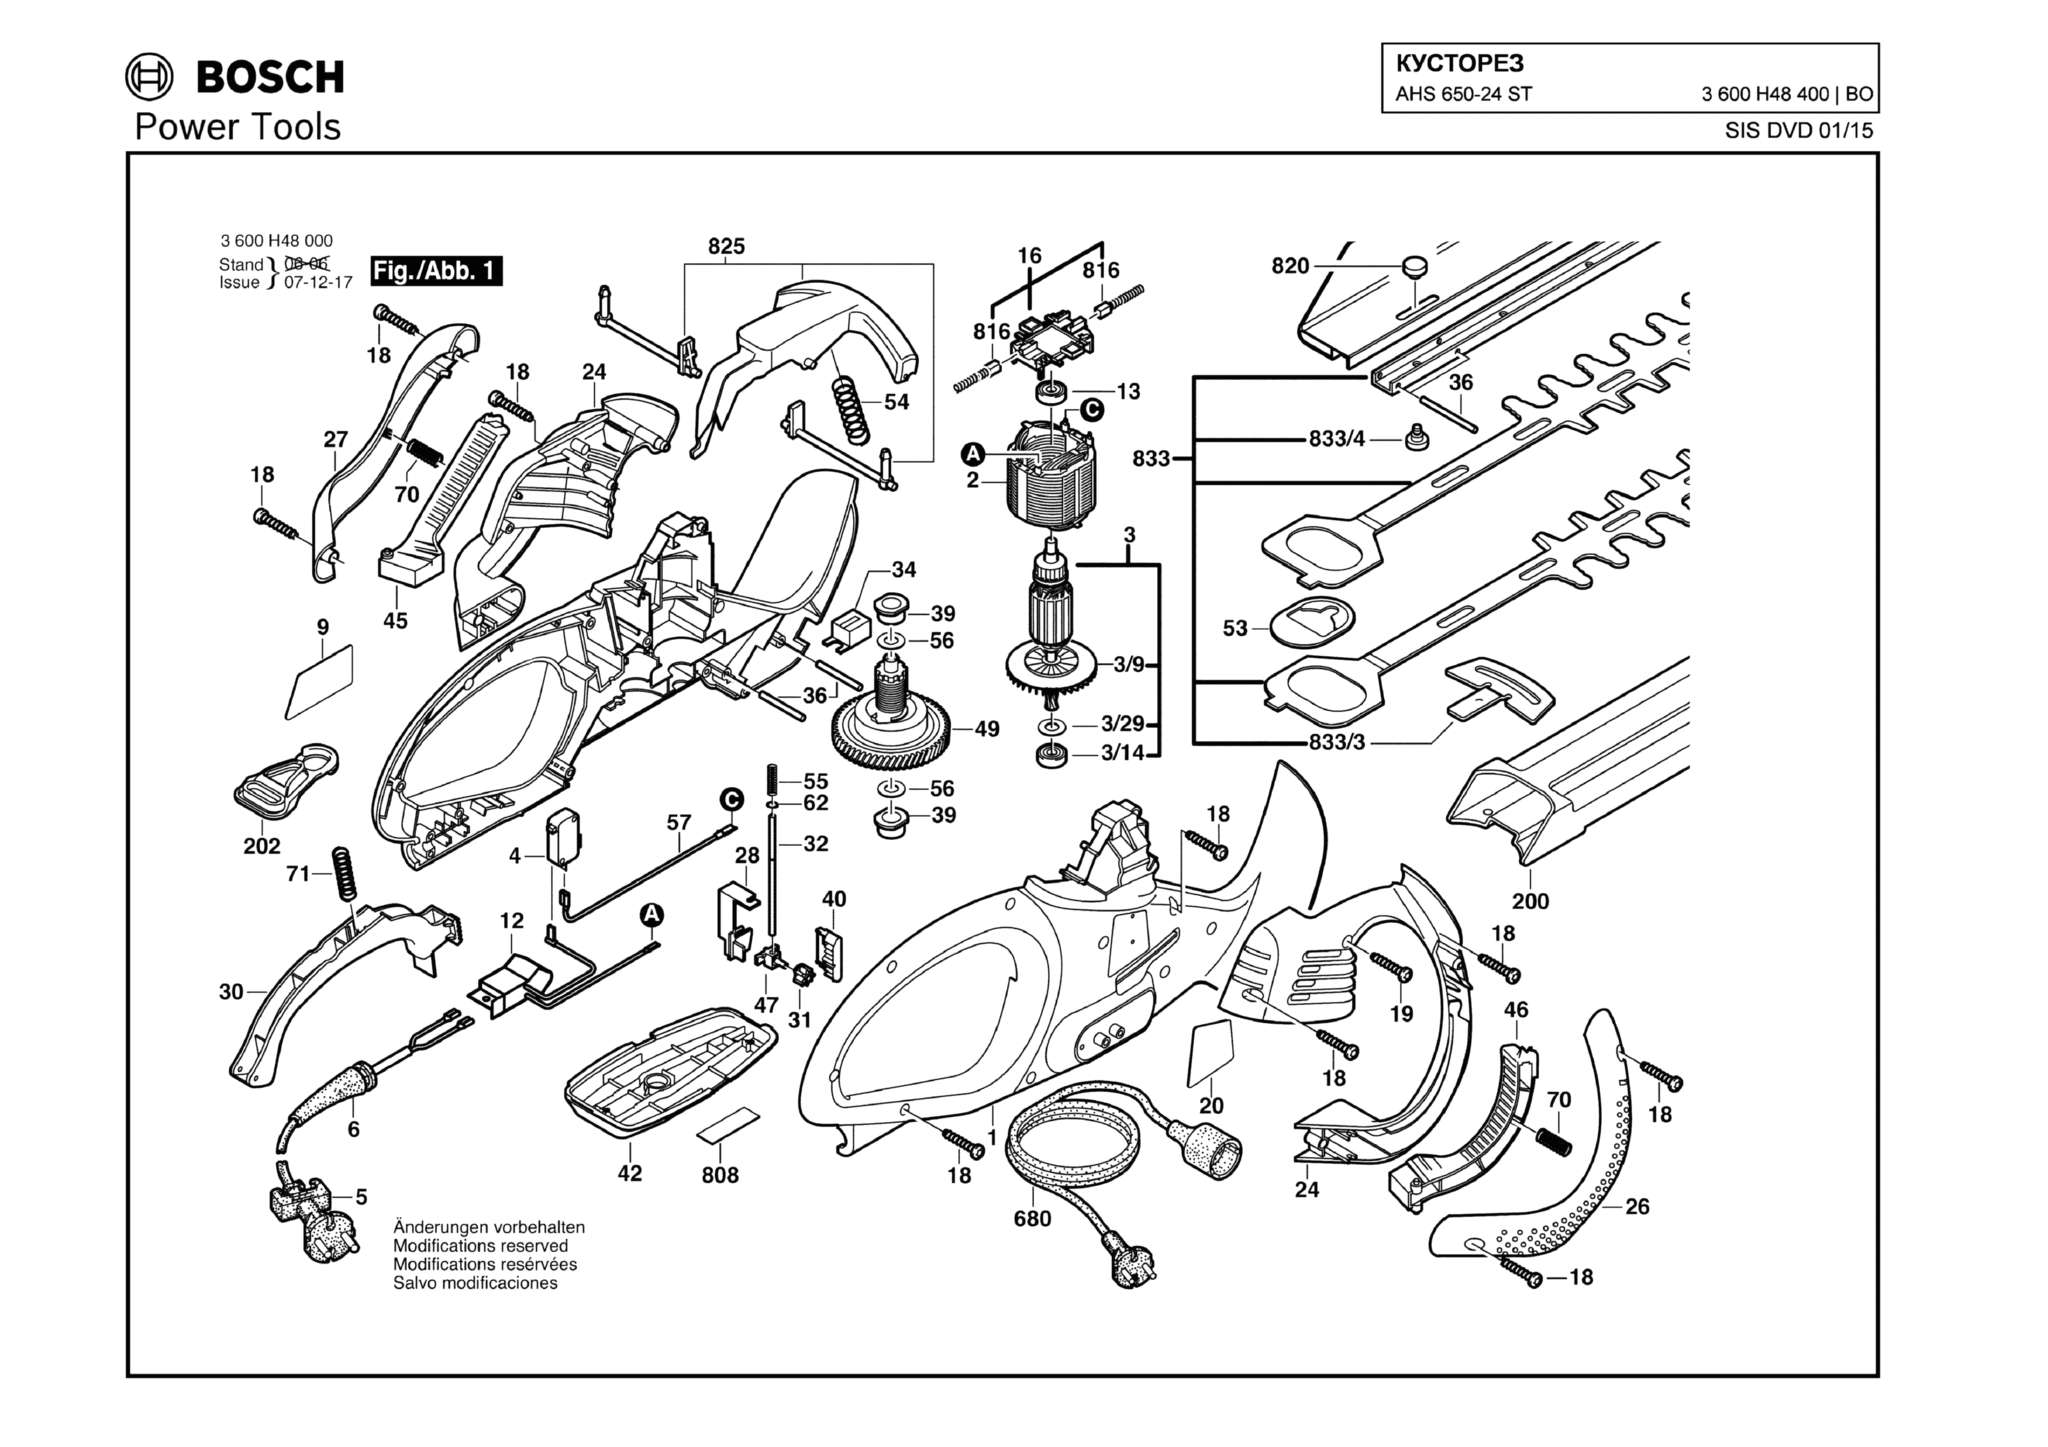 Запчасти, схема и деталировка Bosch AHS 650-24 ST (ТИП 3600H48400)